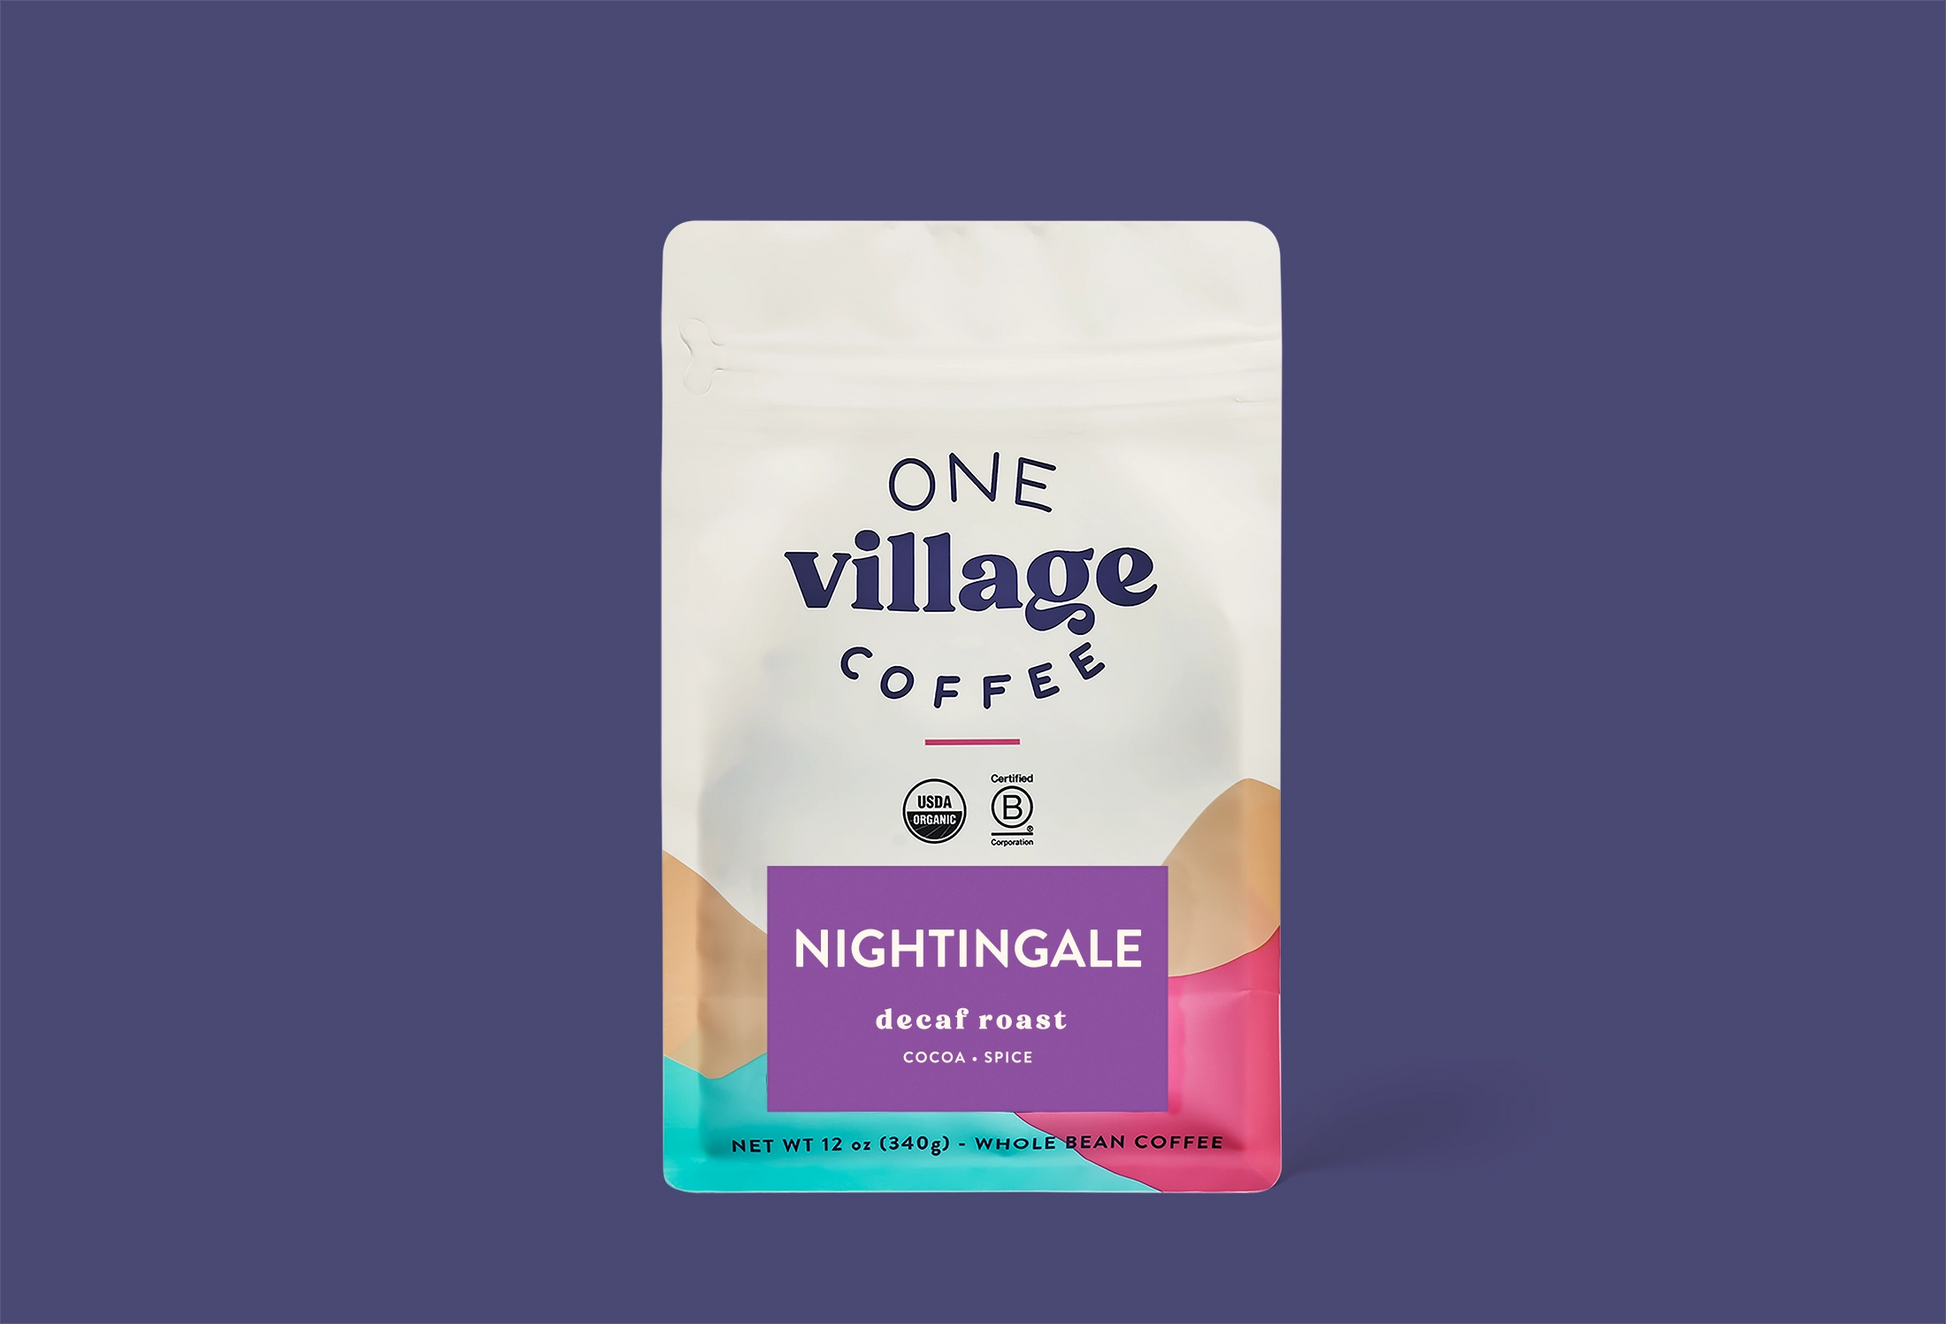 Image of Nightingale coffee bag.